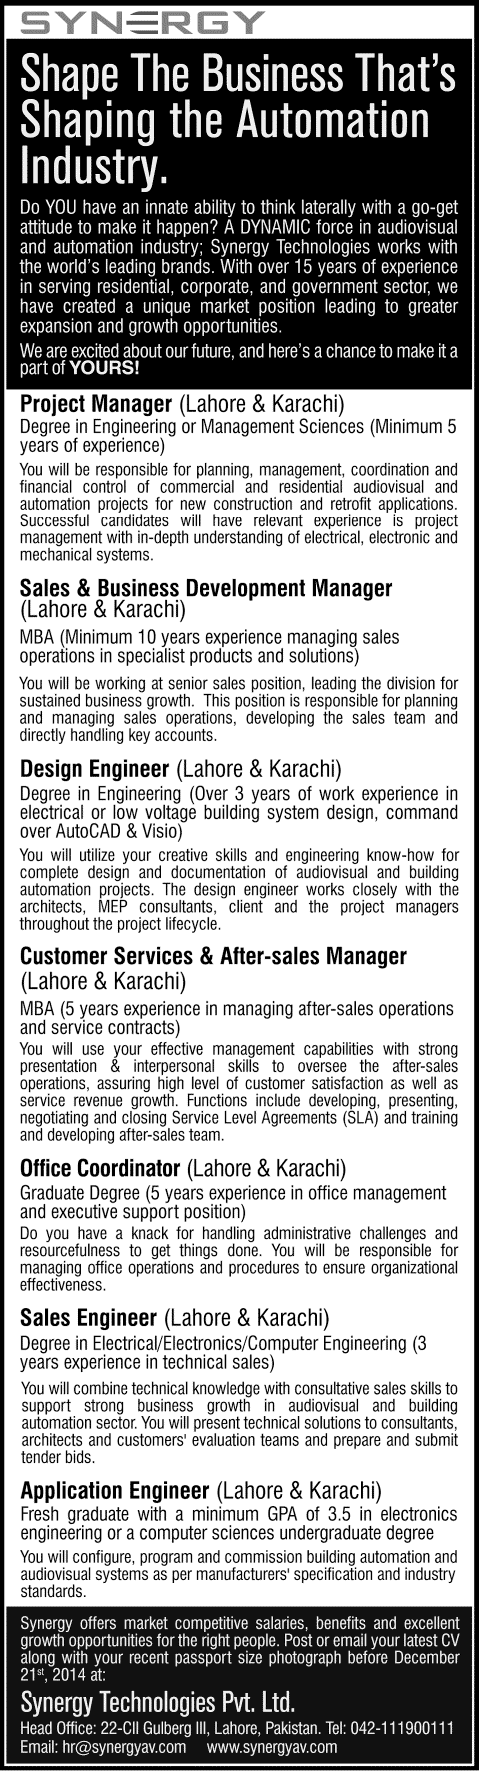 Synergy Technologies Pvt. Ltd Lahore / Karachi Jobs 2014 December Latest